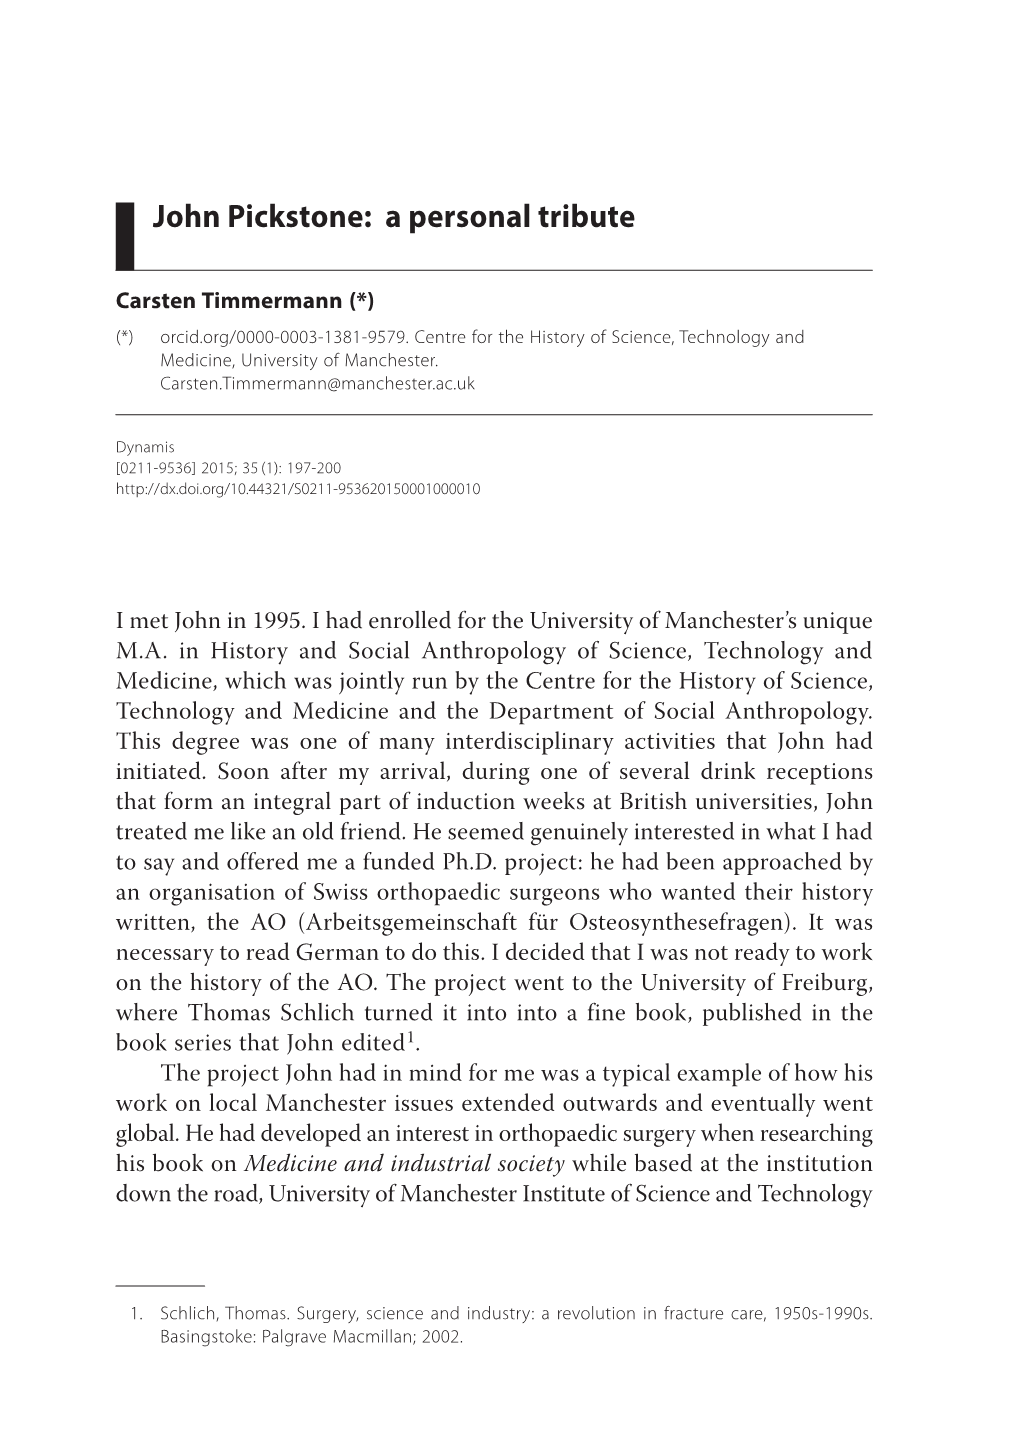 John Pickstone: a Personal Tribute